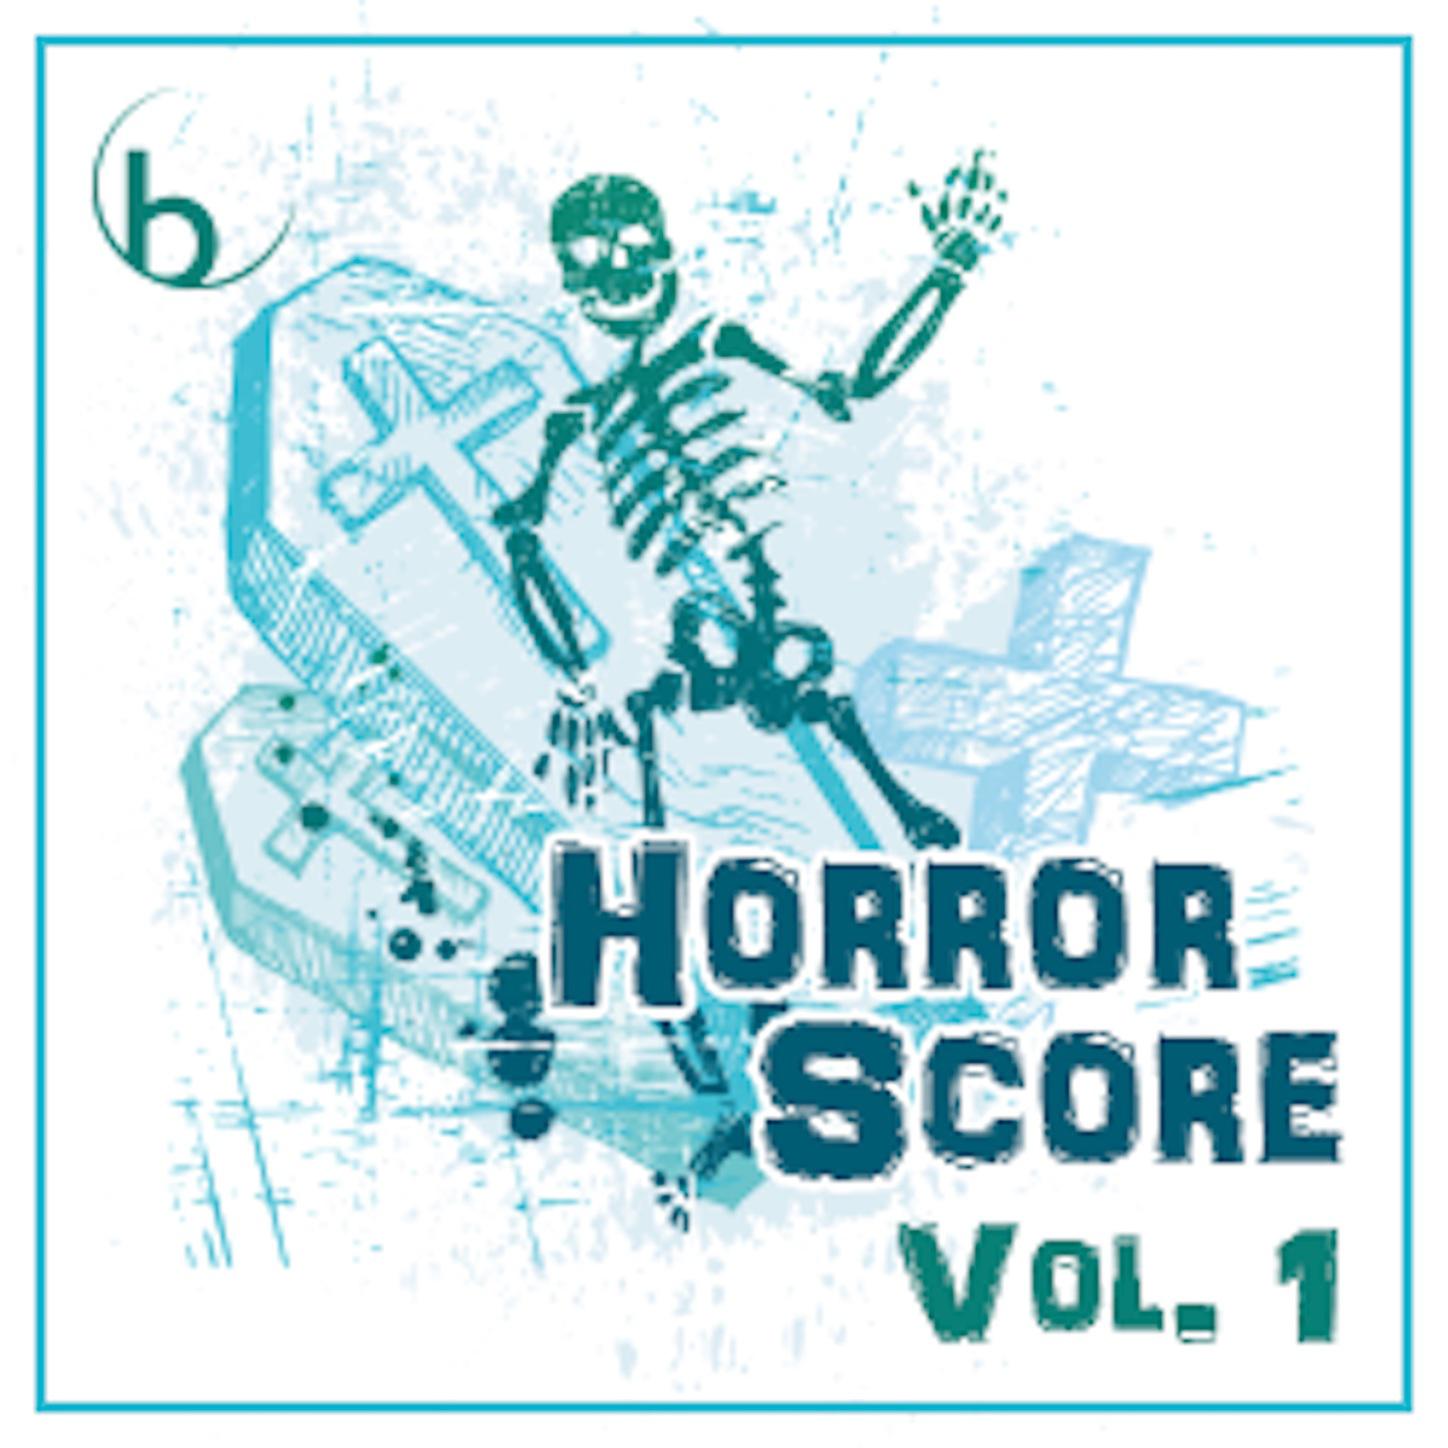 Horror Score Vol. 1